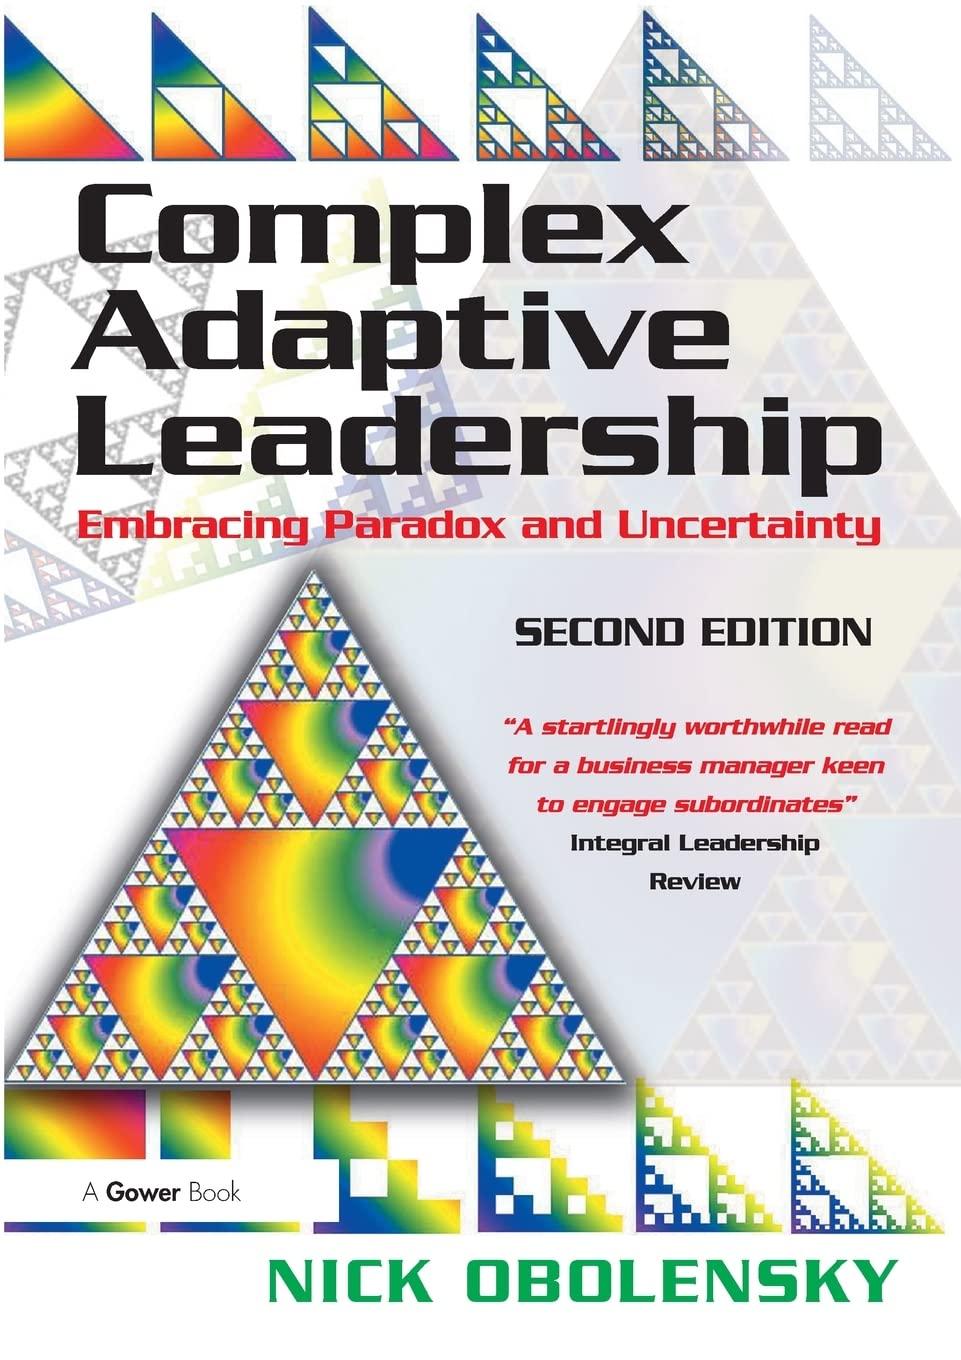 complex adaptive leadership embracing paradox and uncertainty 2nd edition nick obolensky 1472447913,